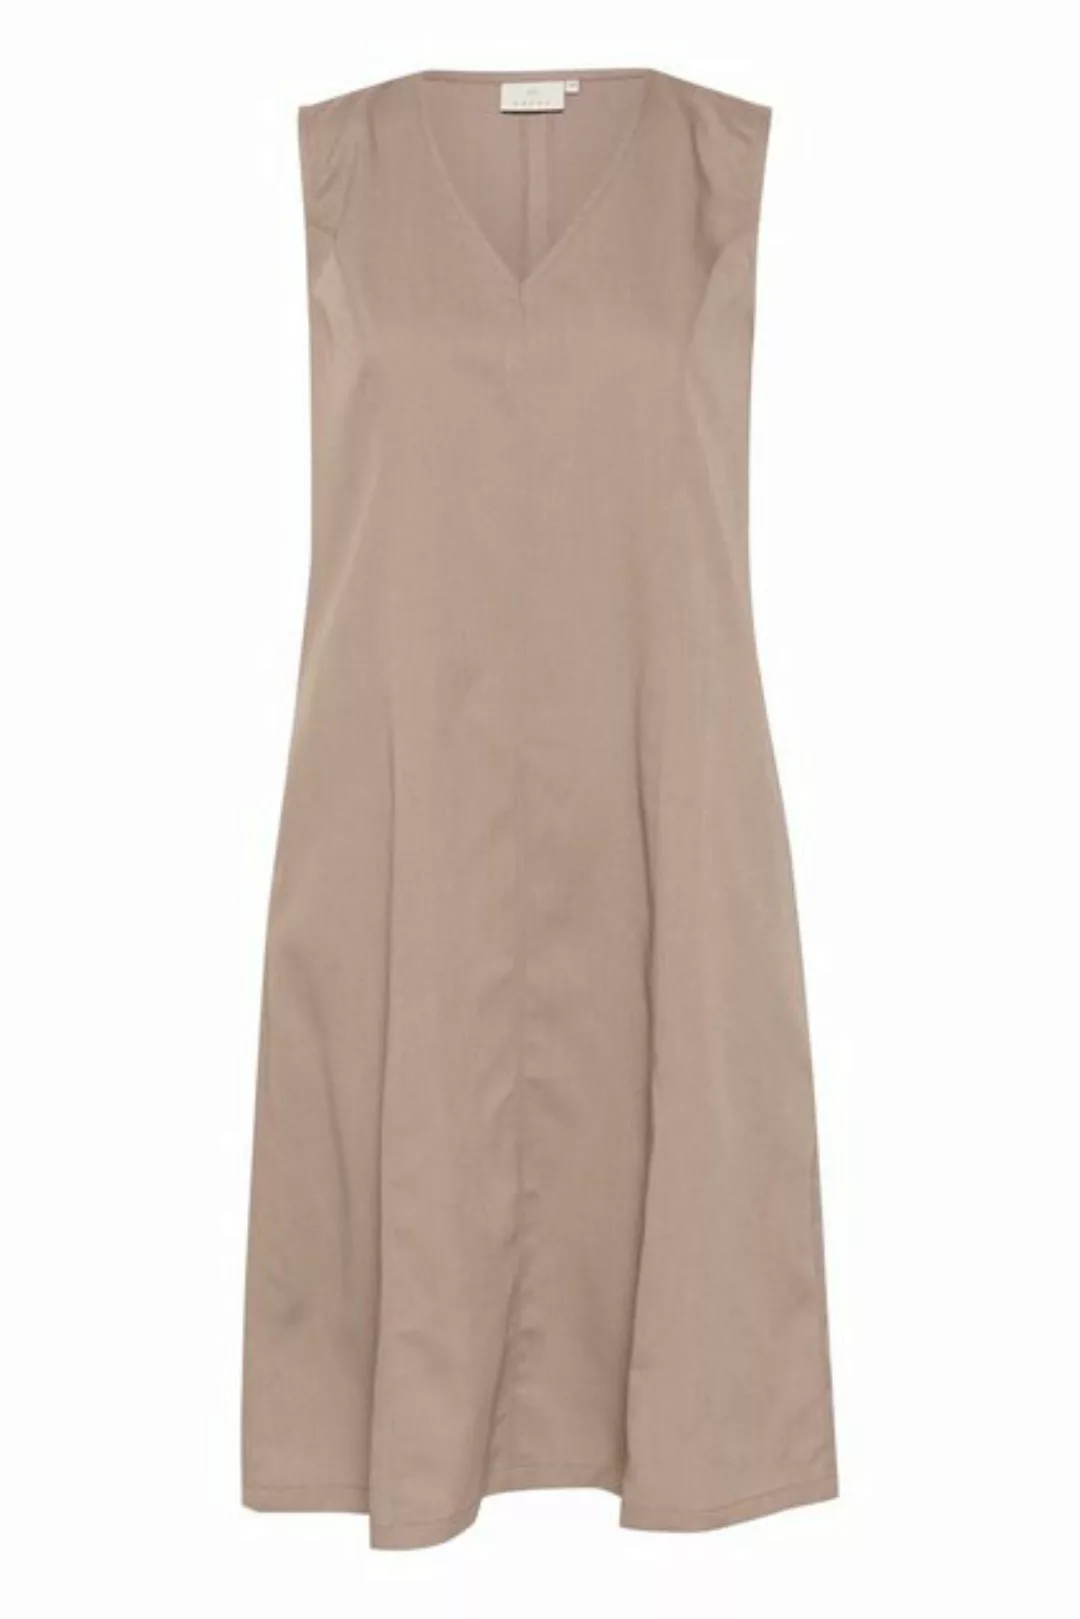 KAFFE Jerseykleid Kleid KApernille günstig online kaufen